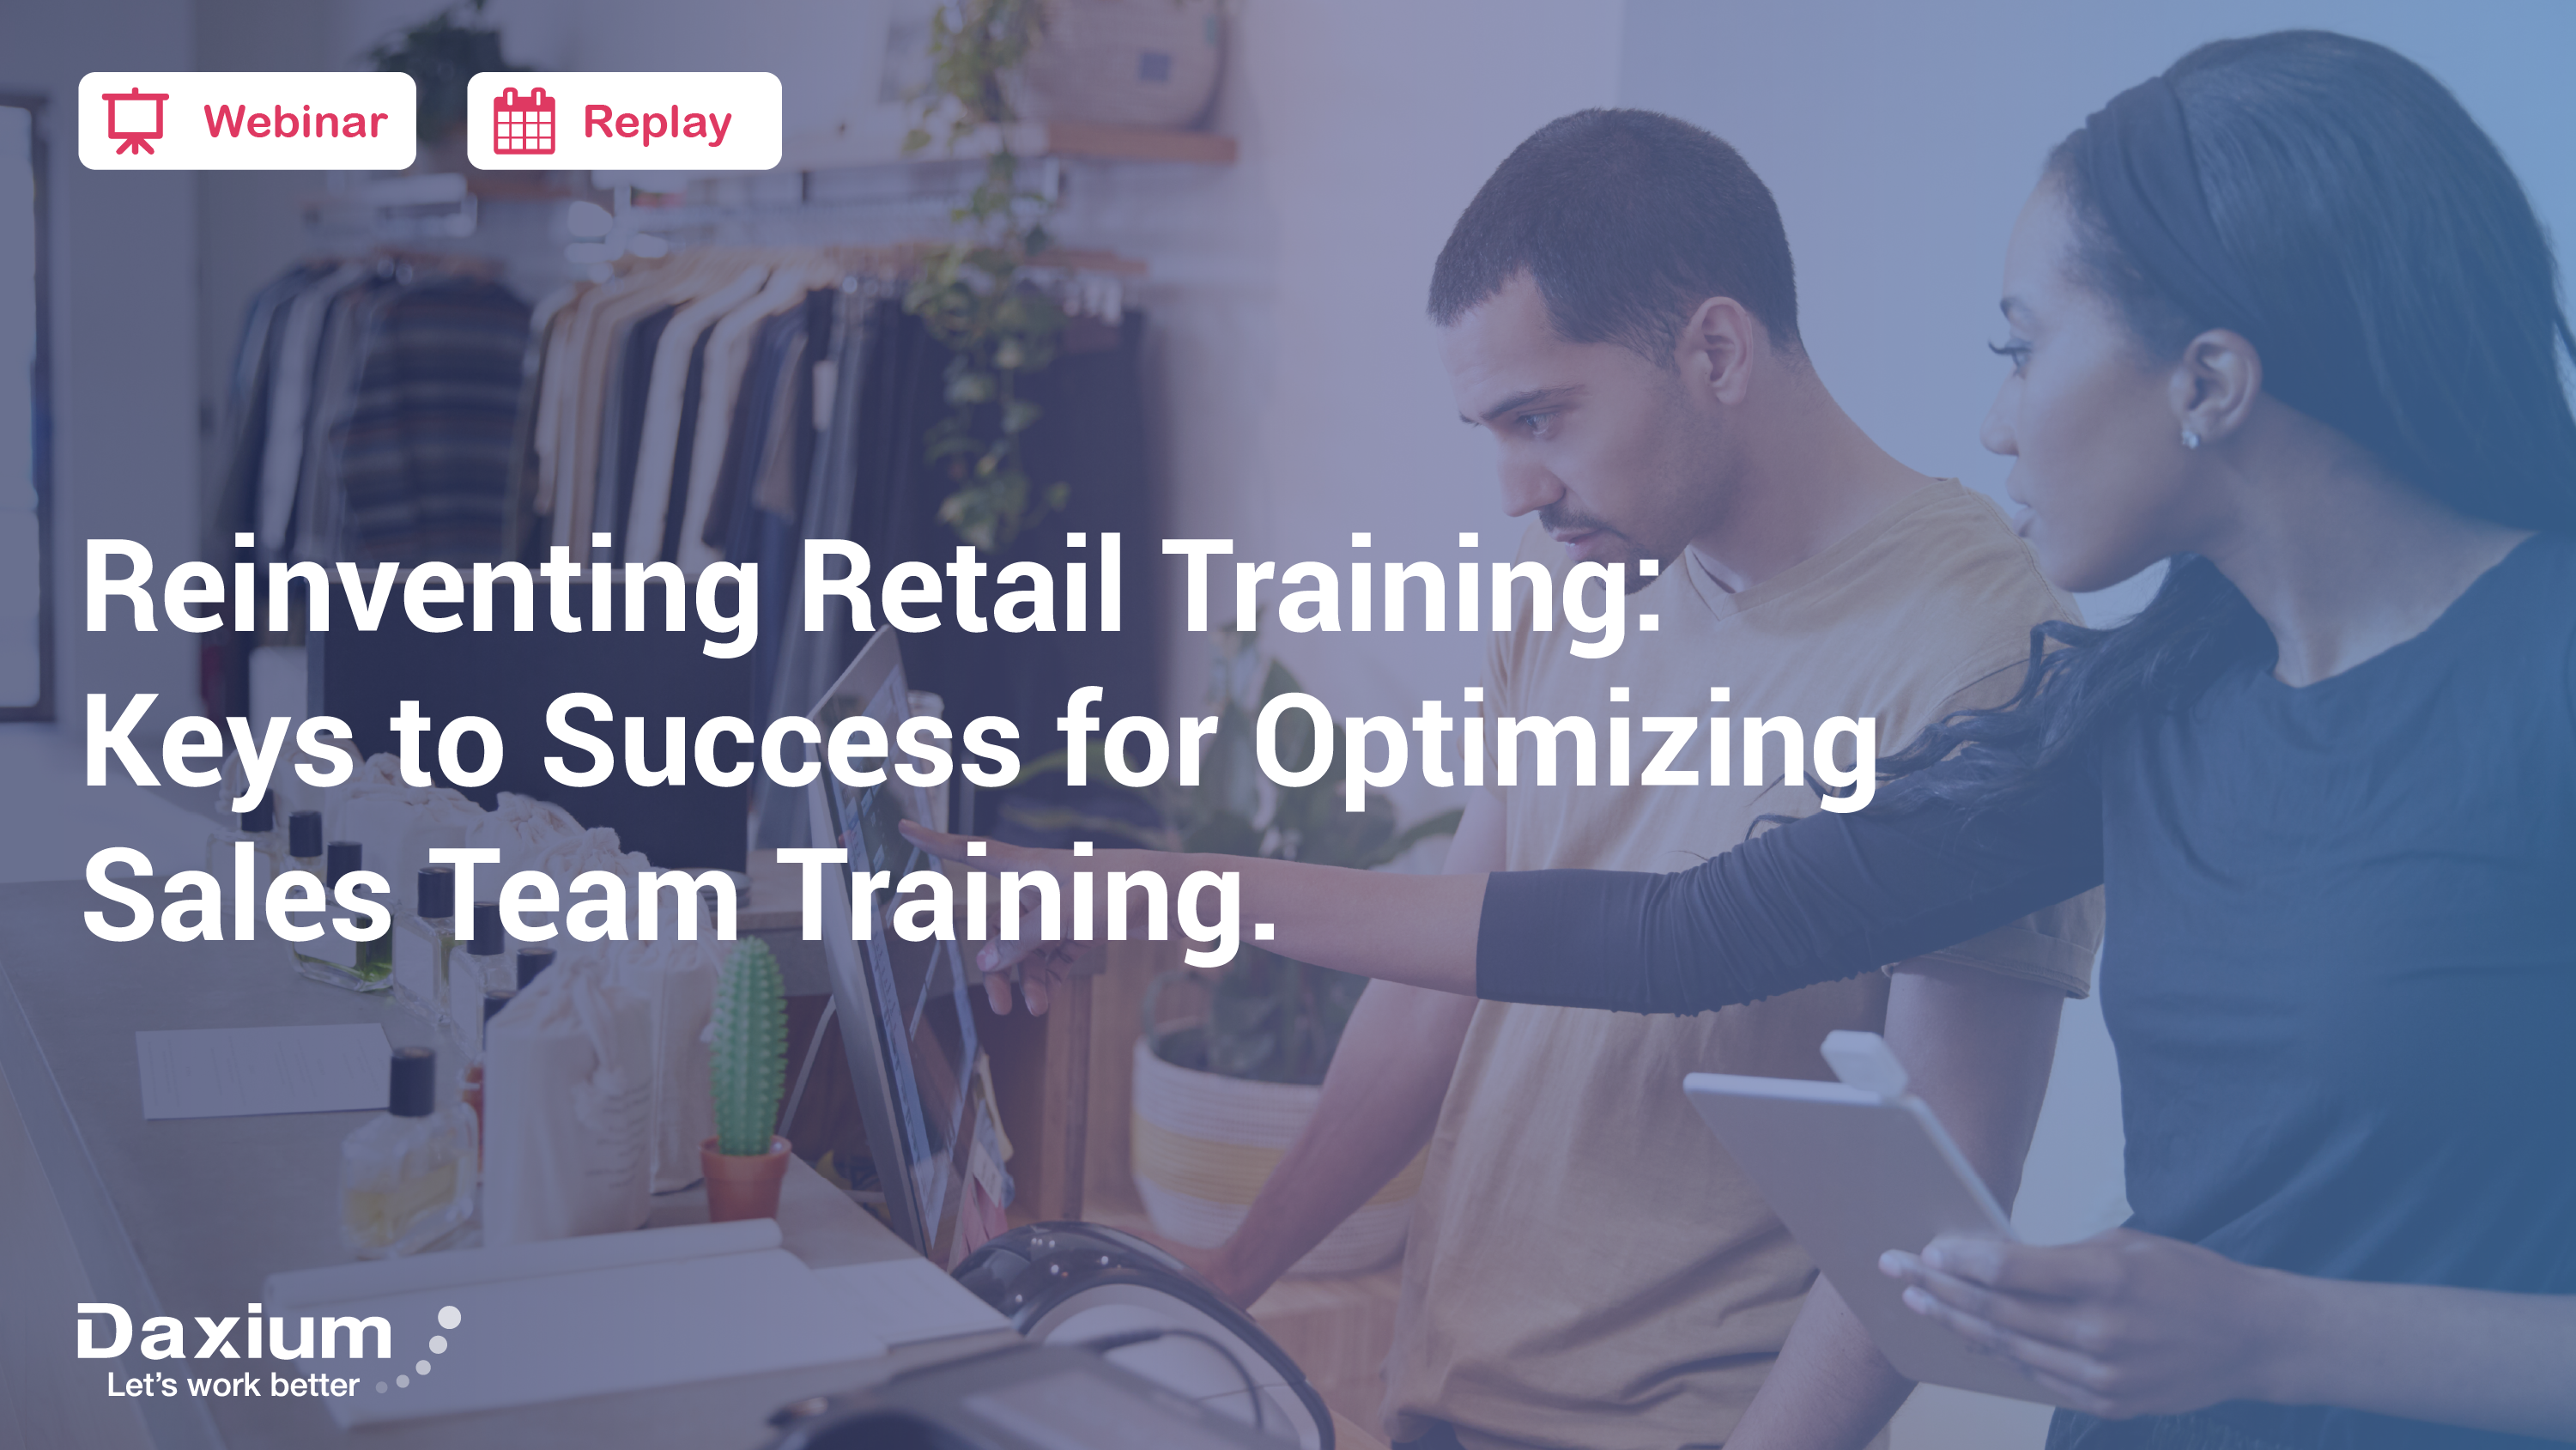 Replay retail training webinar